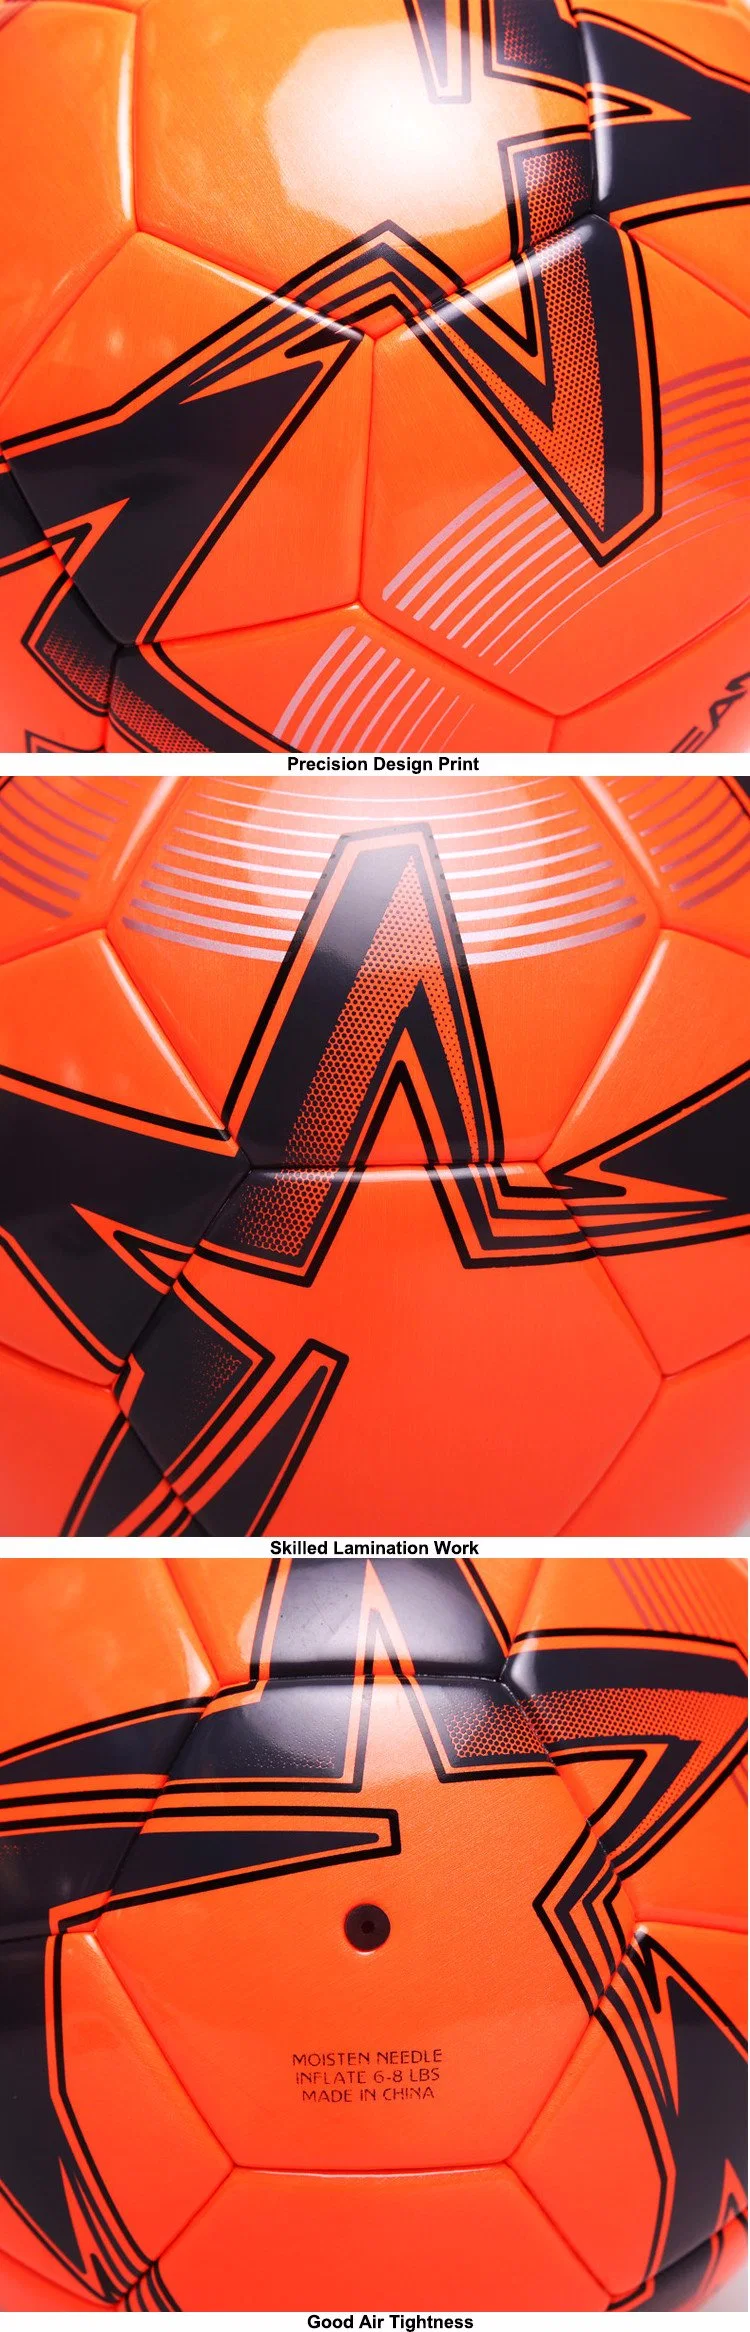 High Level Vivid Slick Genuine Leather Soccer Ball